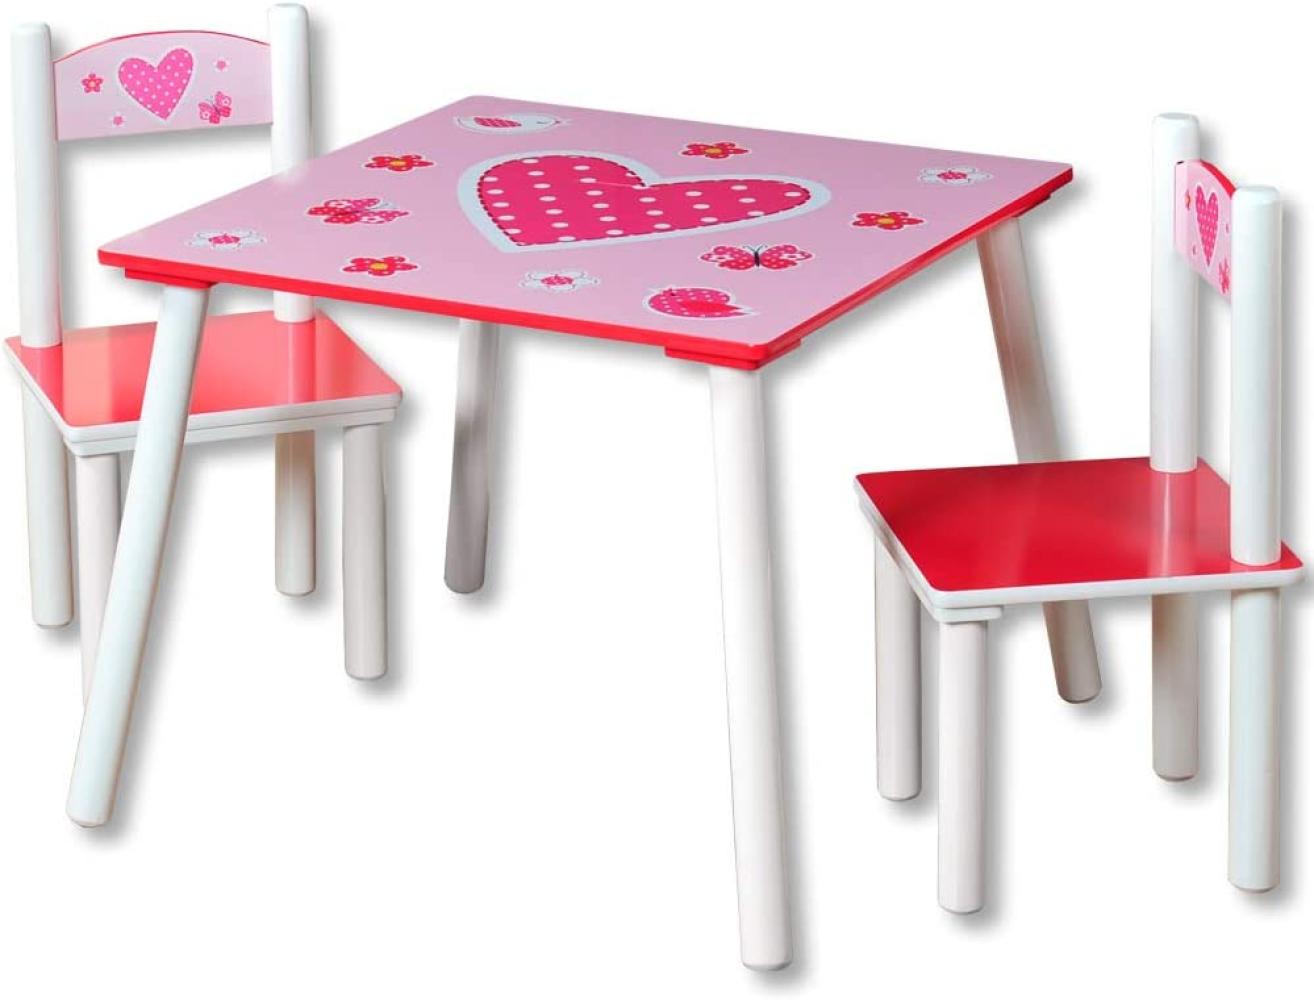 Kesper 'Herzen' Kindersitzgruppe weiß/rot/pink Bild 1